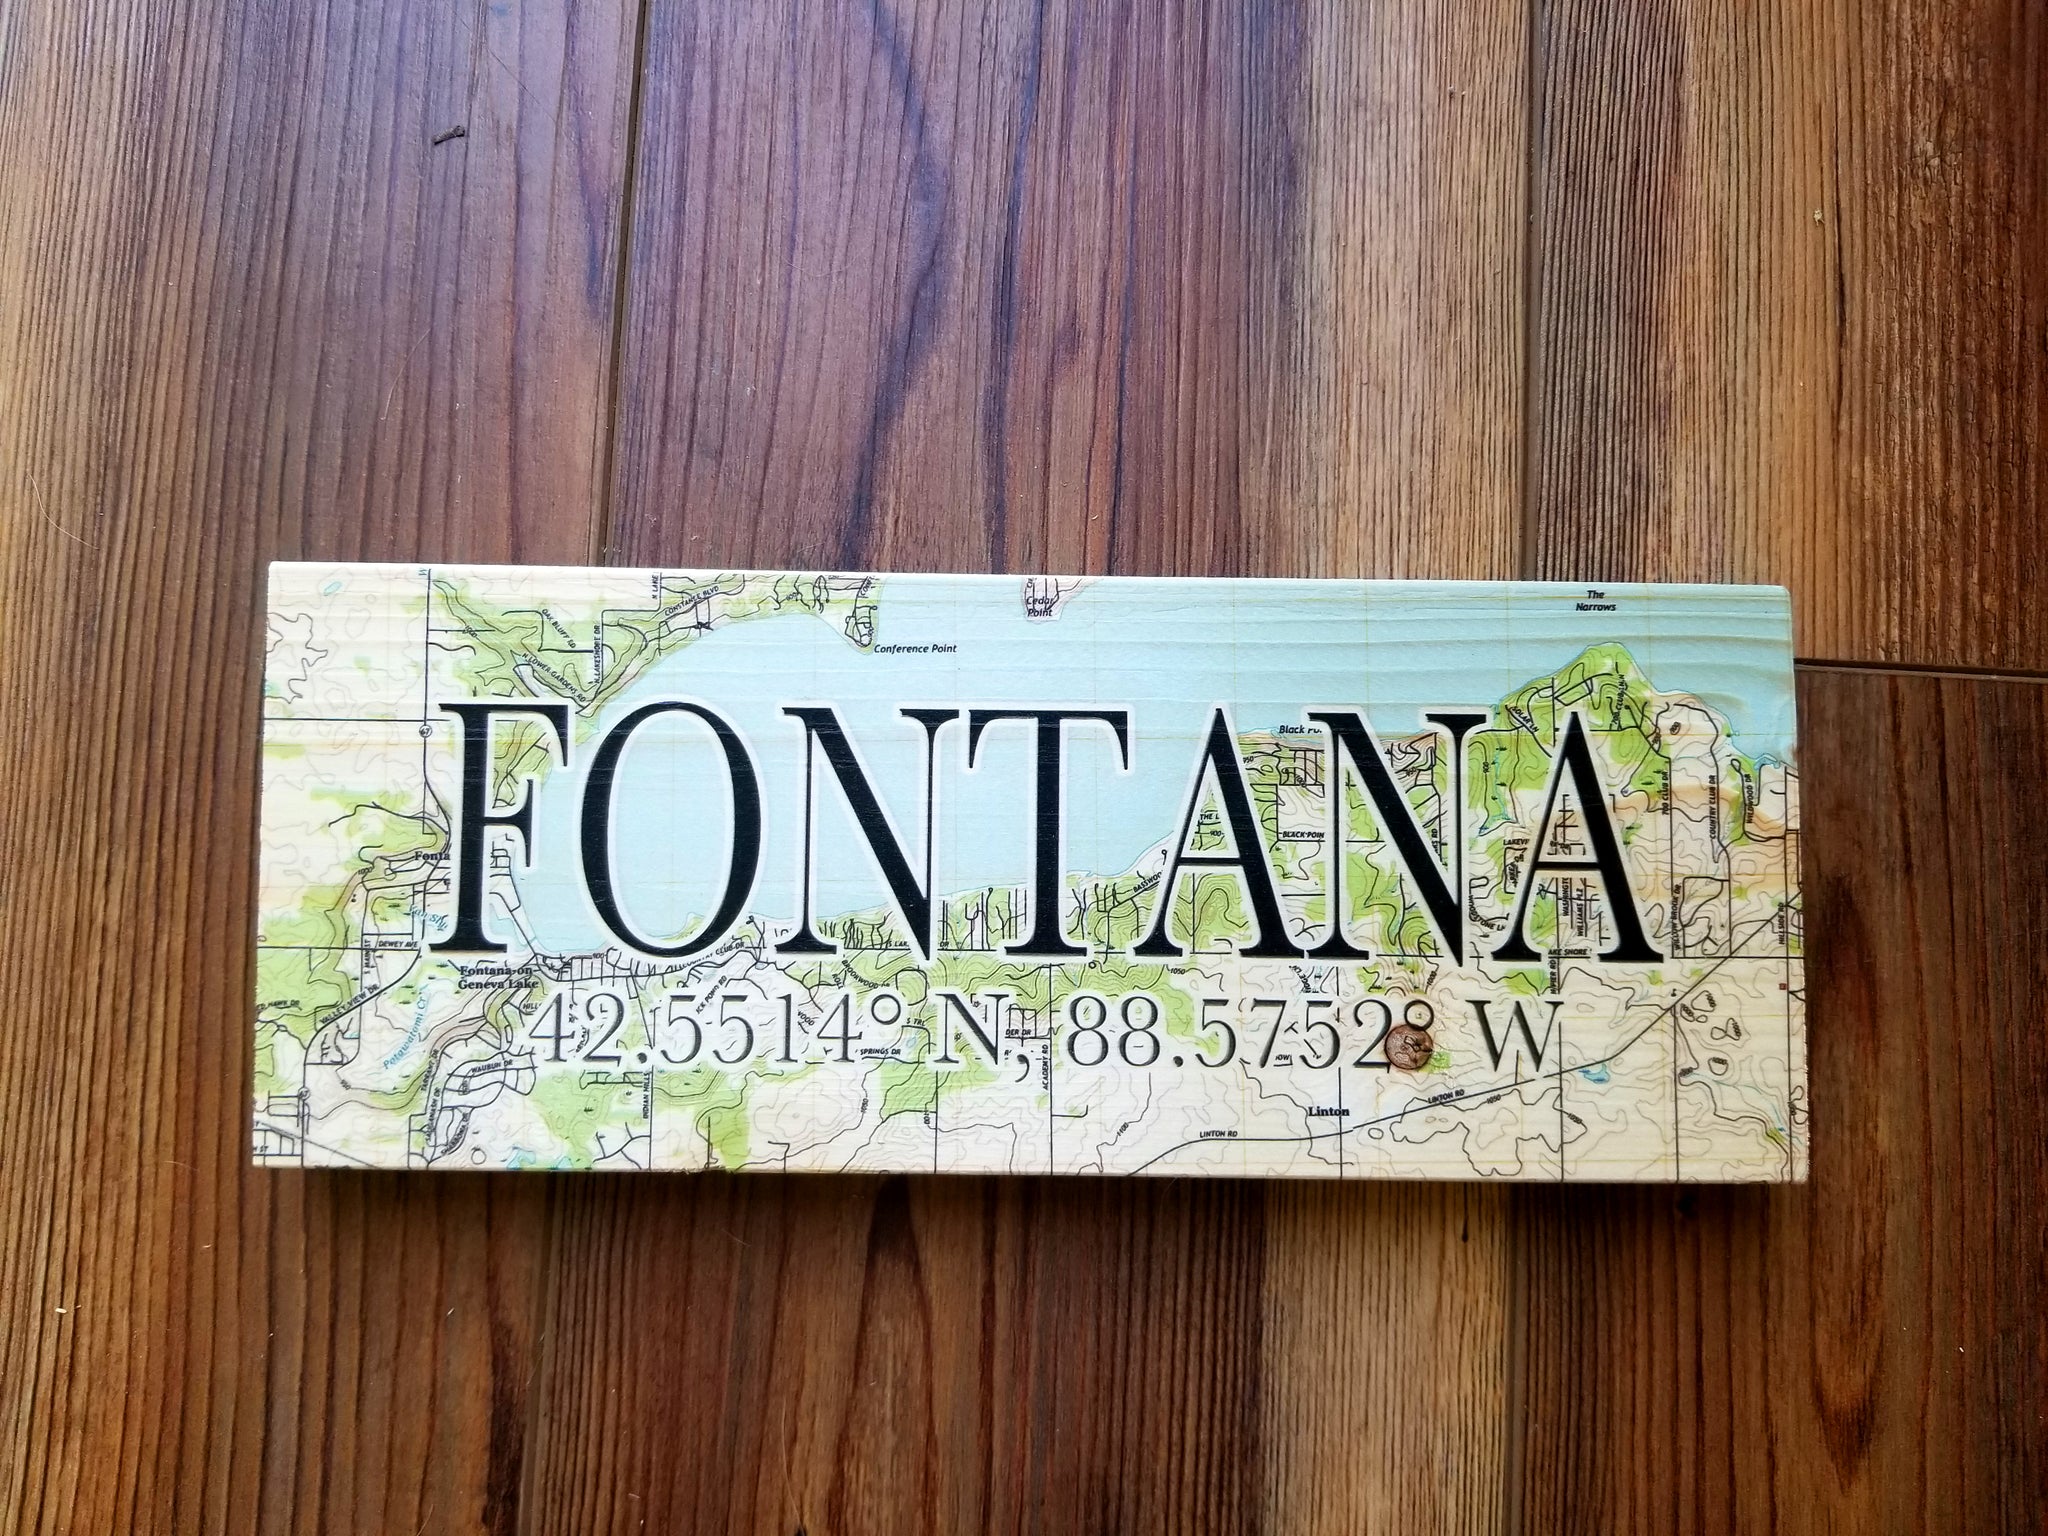 Fontana, WI Mini Coordinate Sign